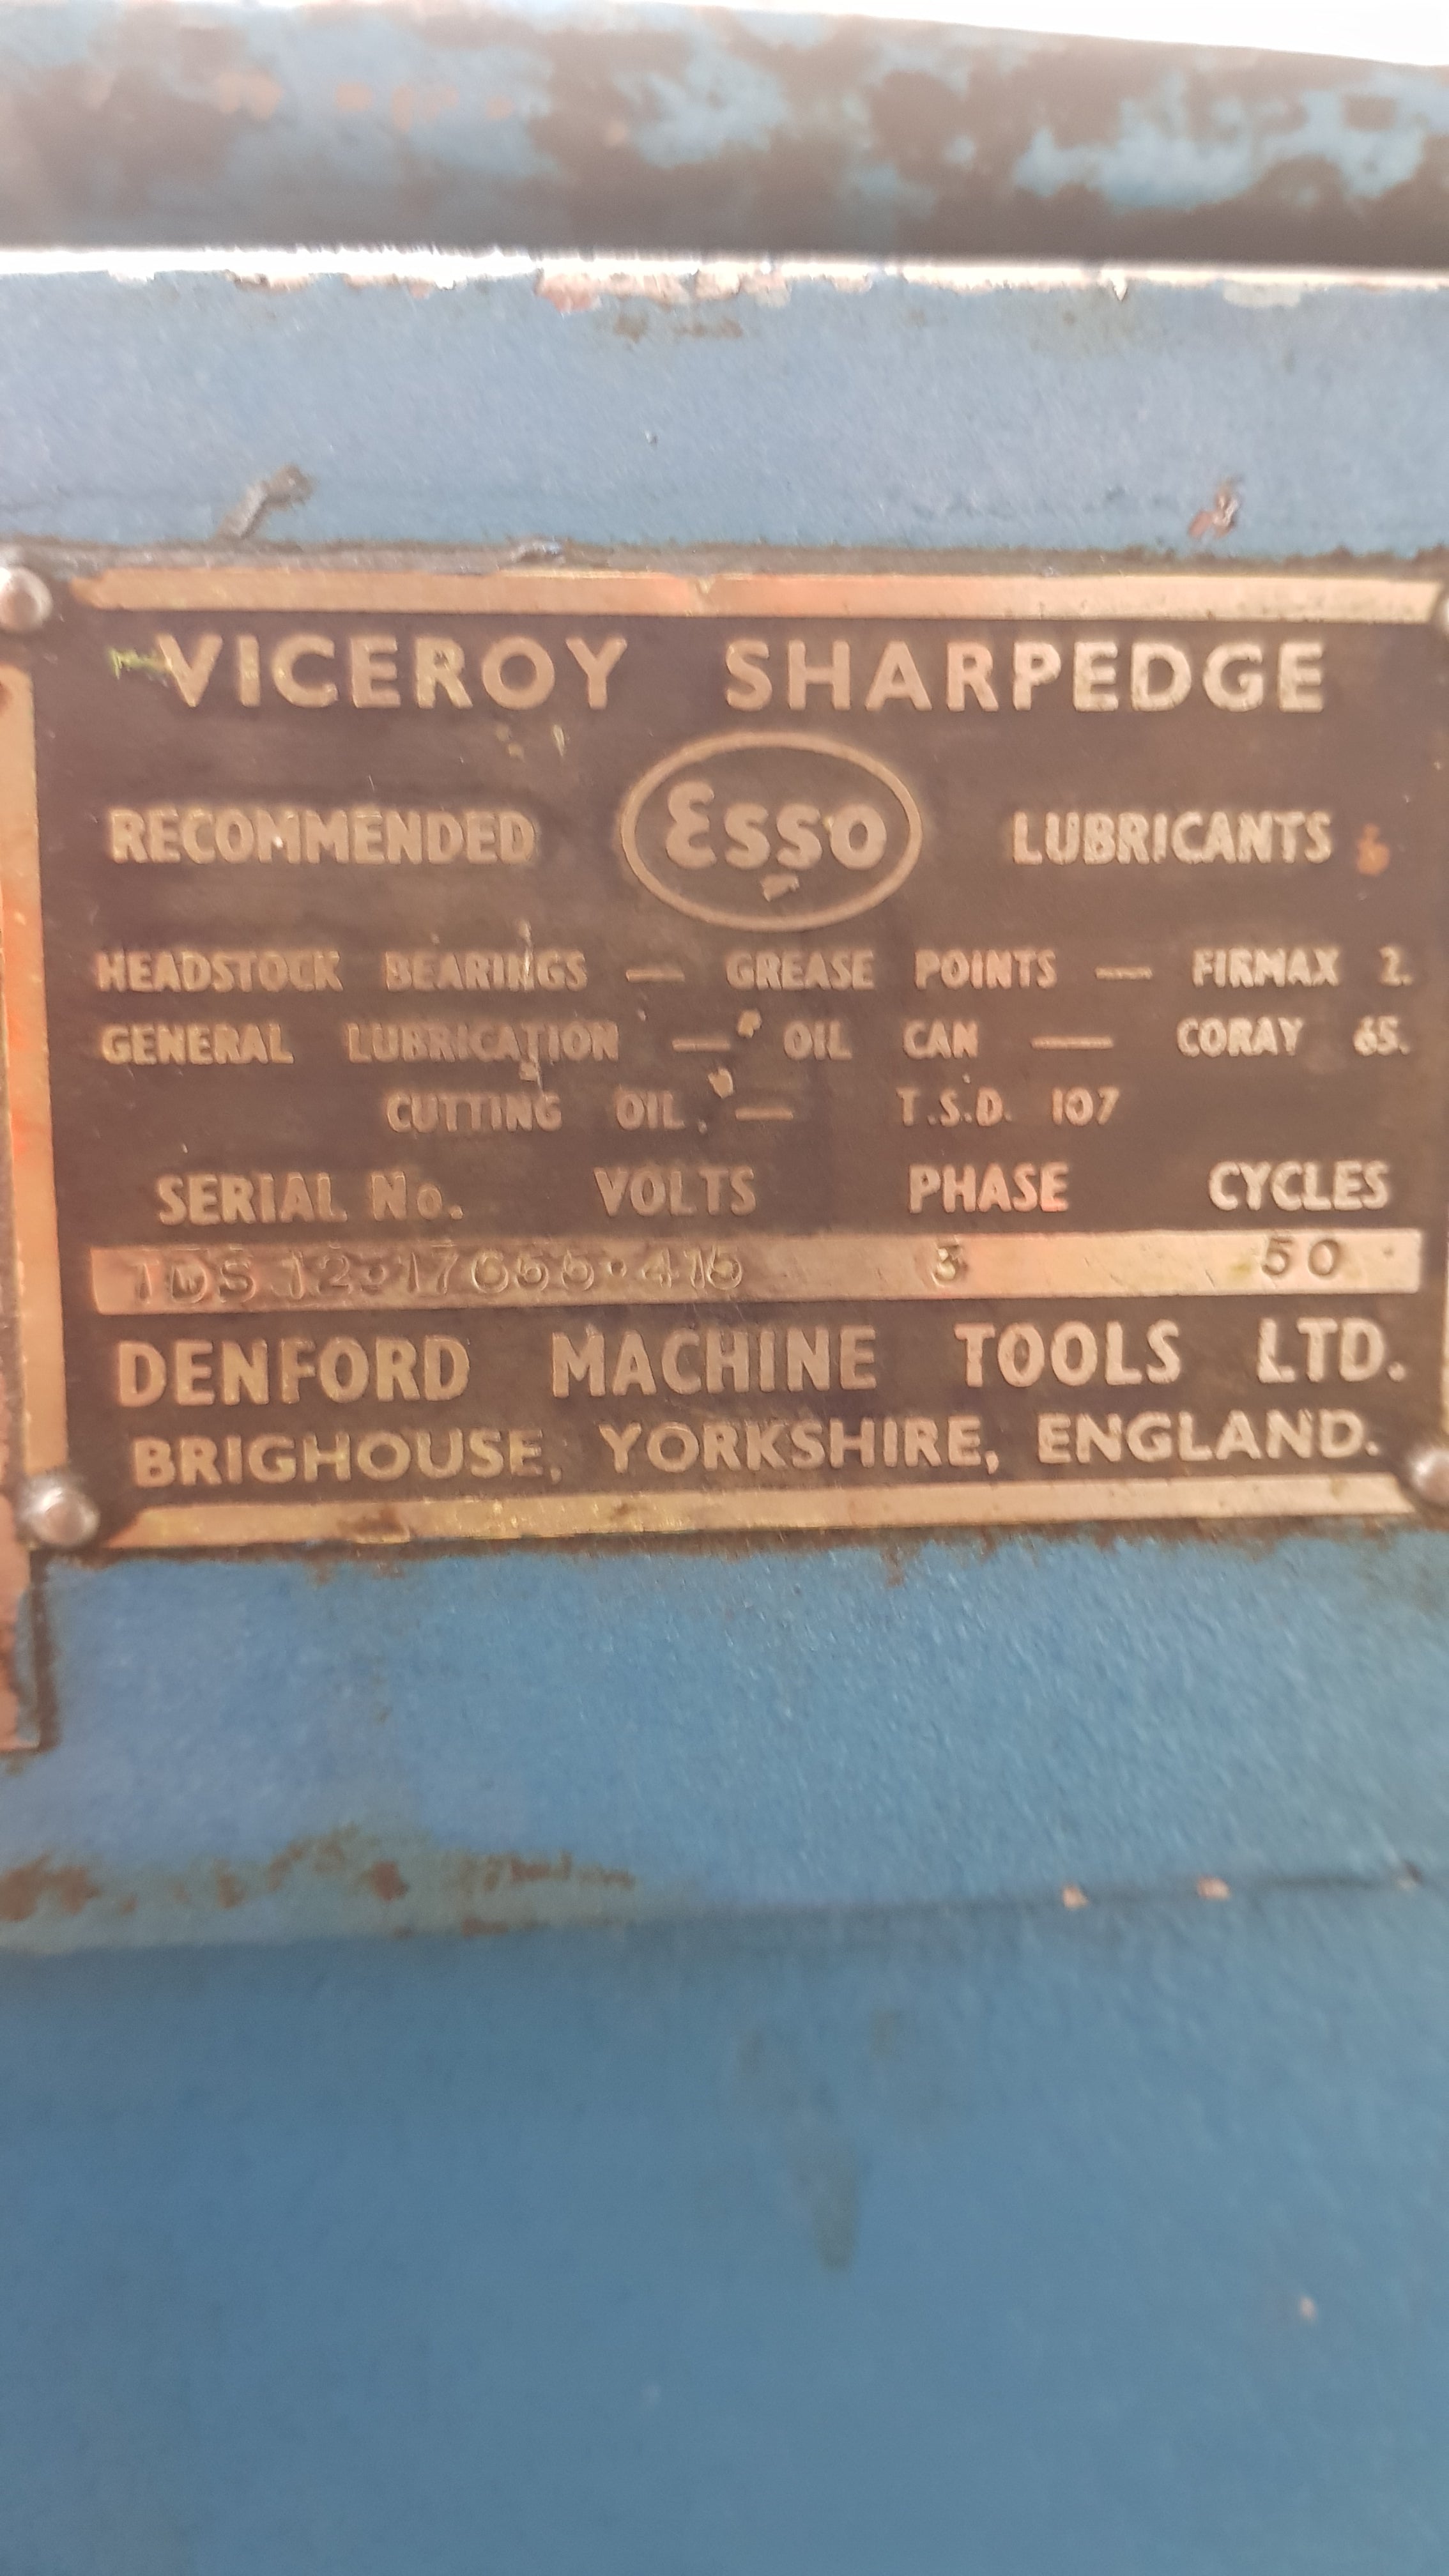 *Pre-Loved* 3PH 10AMP Chisel Bit Sharpener Viceroy Sharpedge Machine By Esso